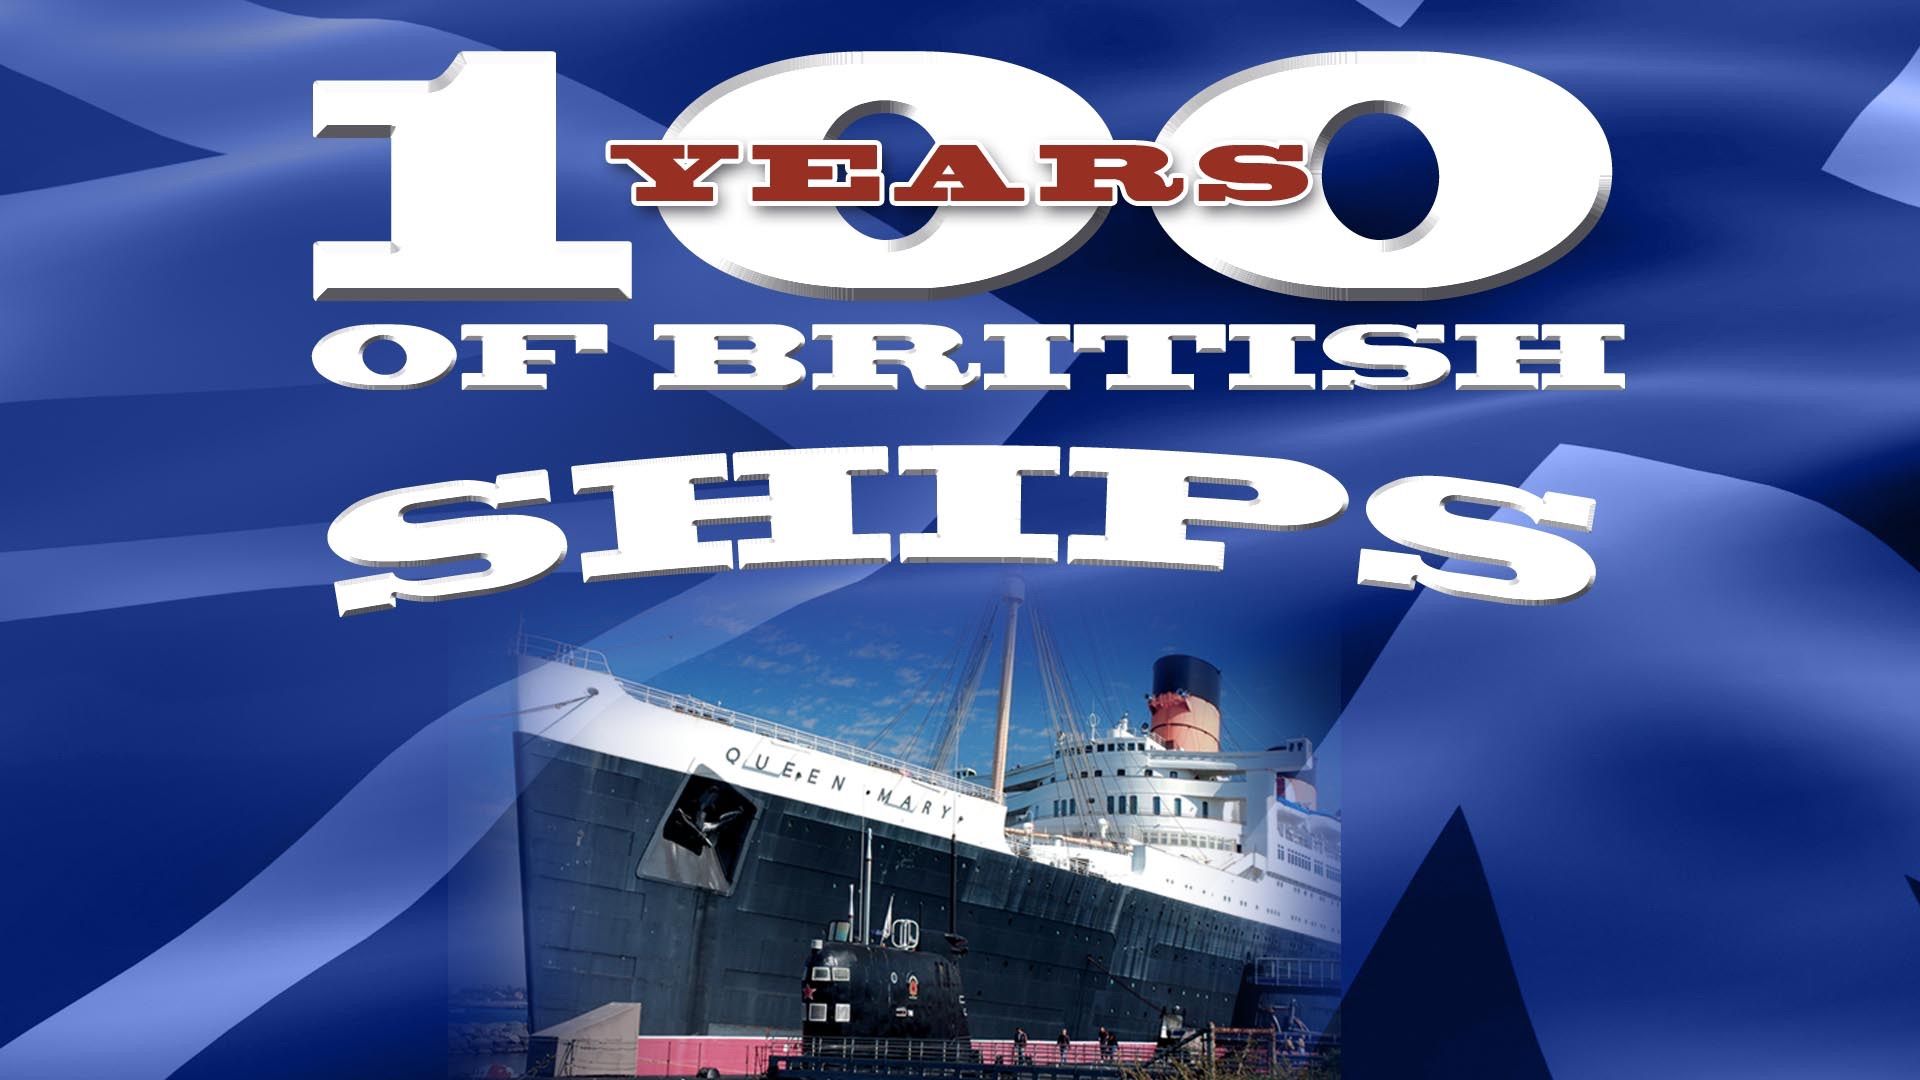 100 Years of British Ships Backdrop